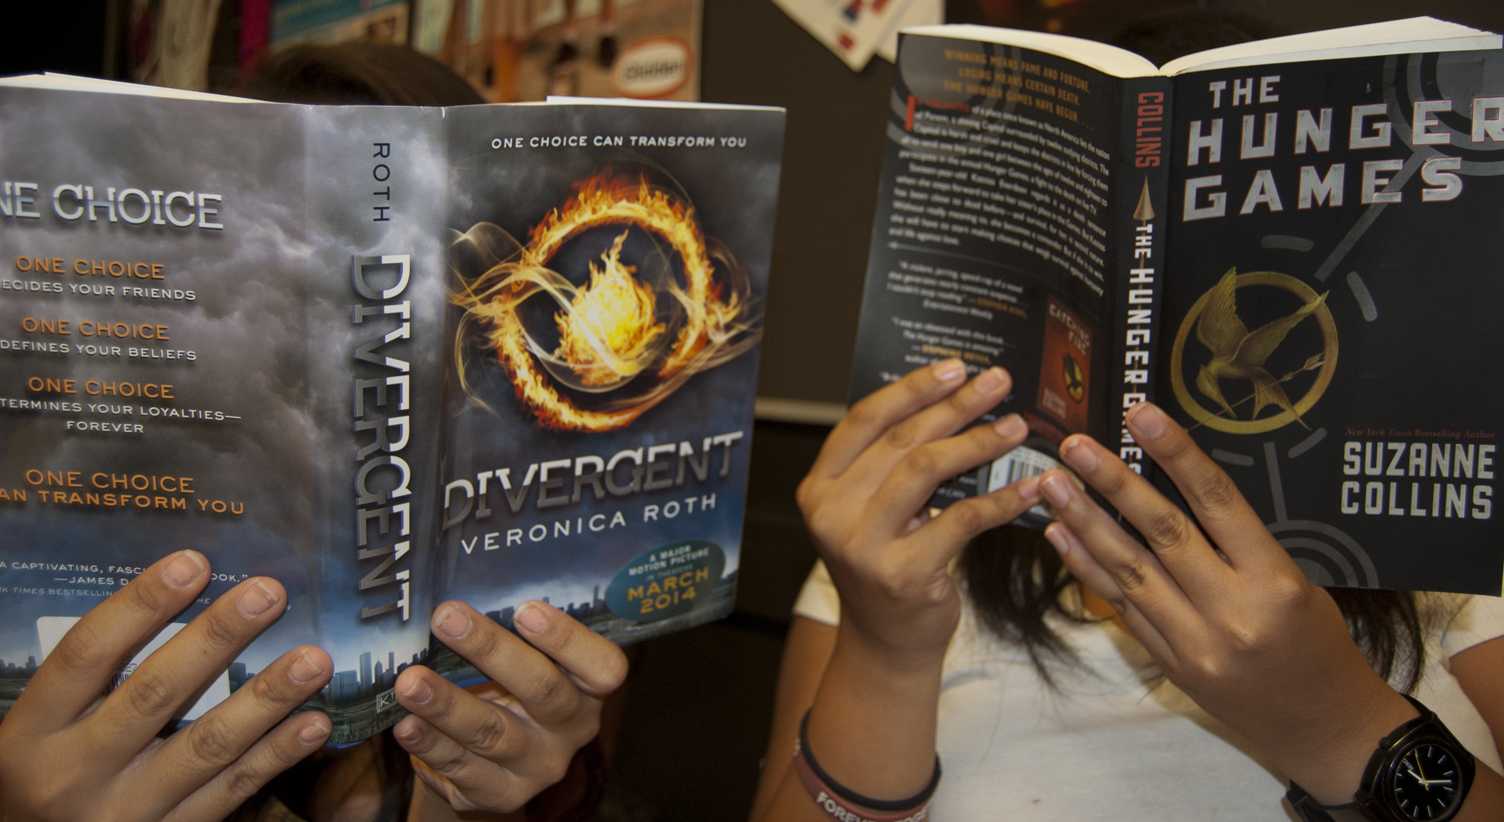 Divergent Vs Hunger Games Comparisons